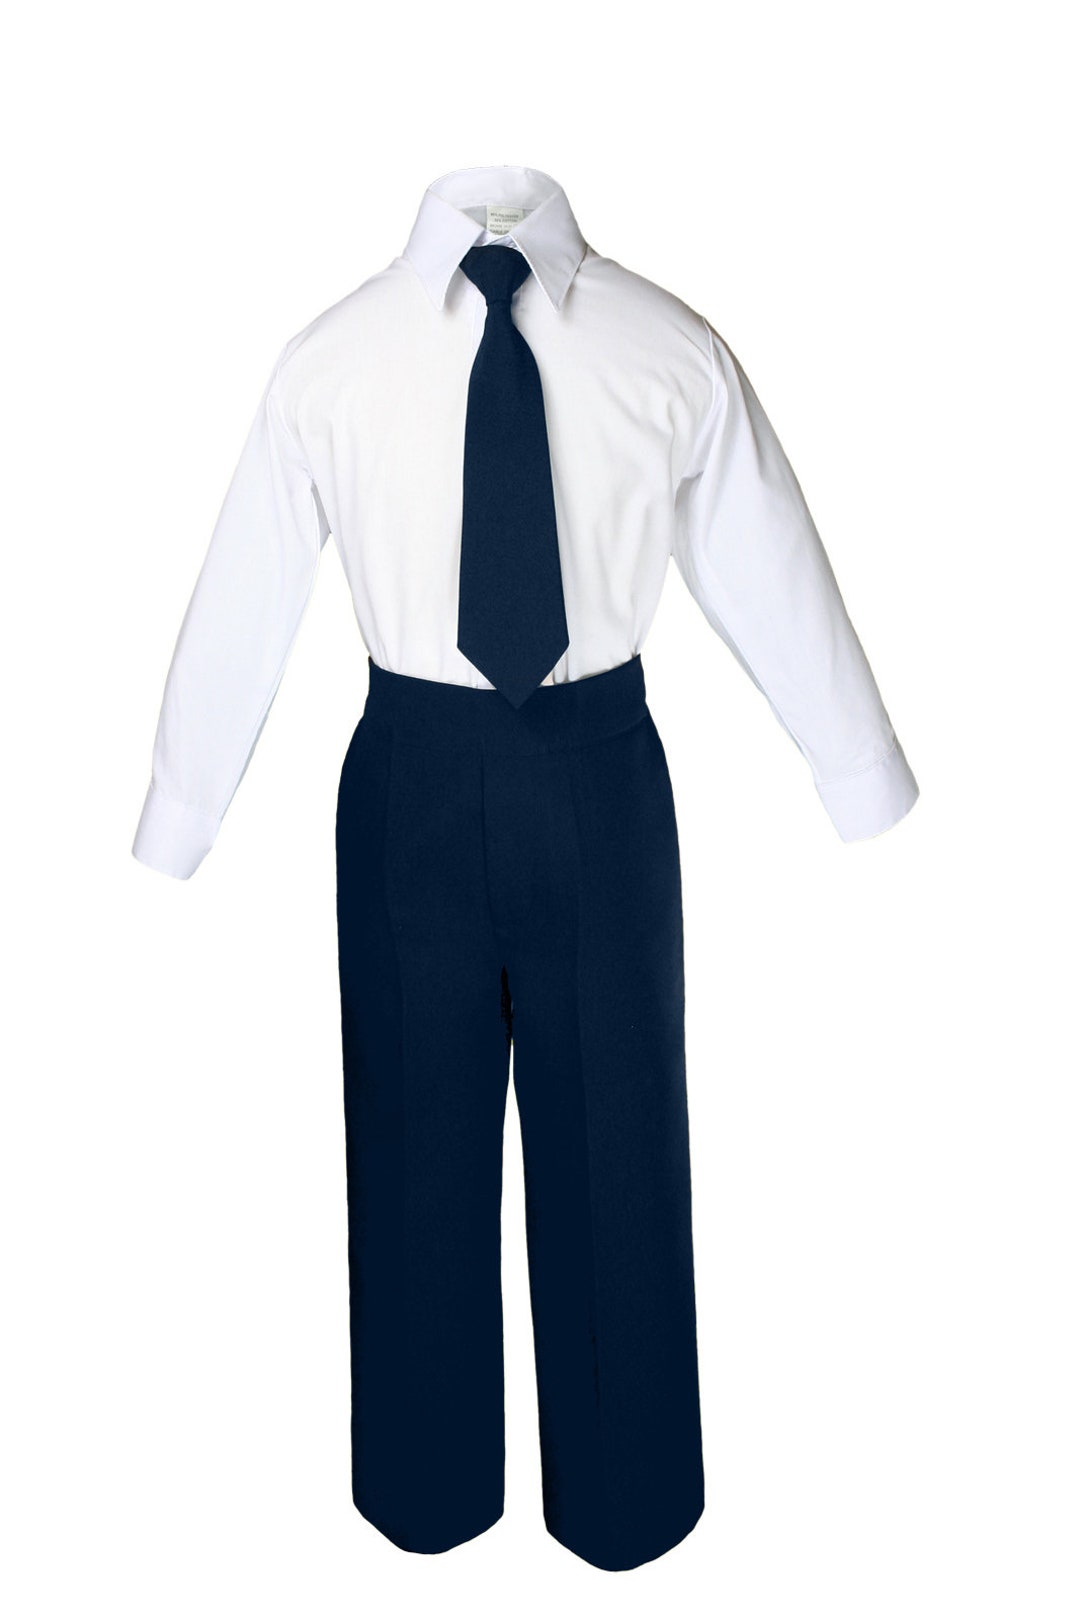 NEW 3 Piece Baby Toddler Boy White Shirt BLACK Pants Long Tie Set Wedding  Formal Occasion C1506 - Etsy Israel